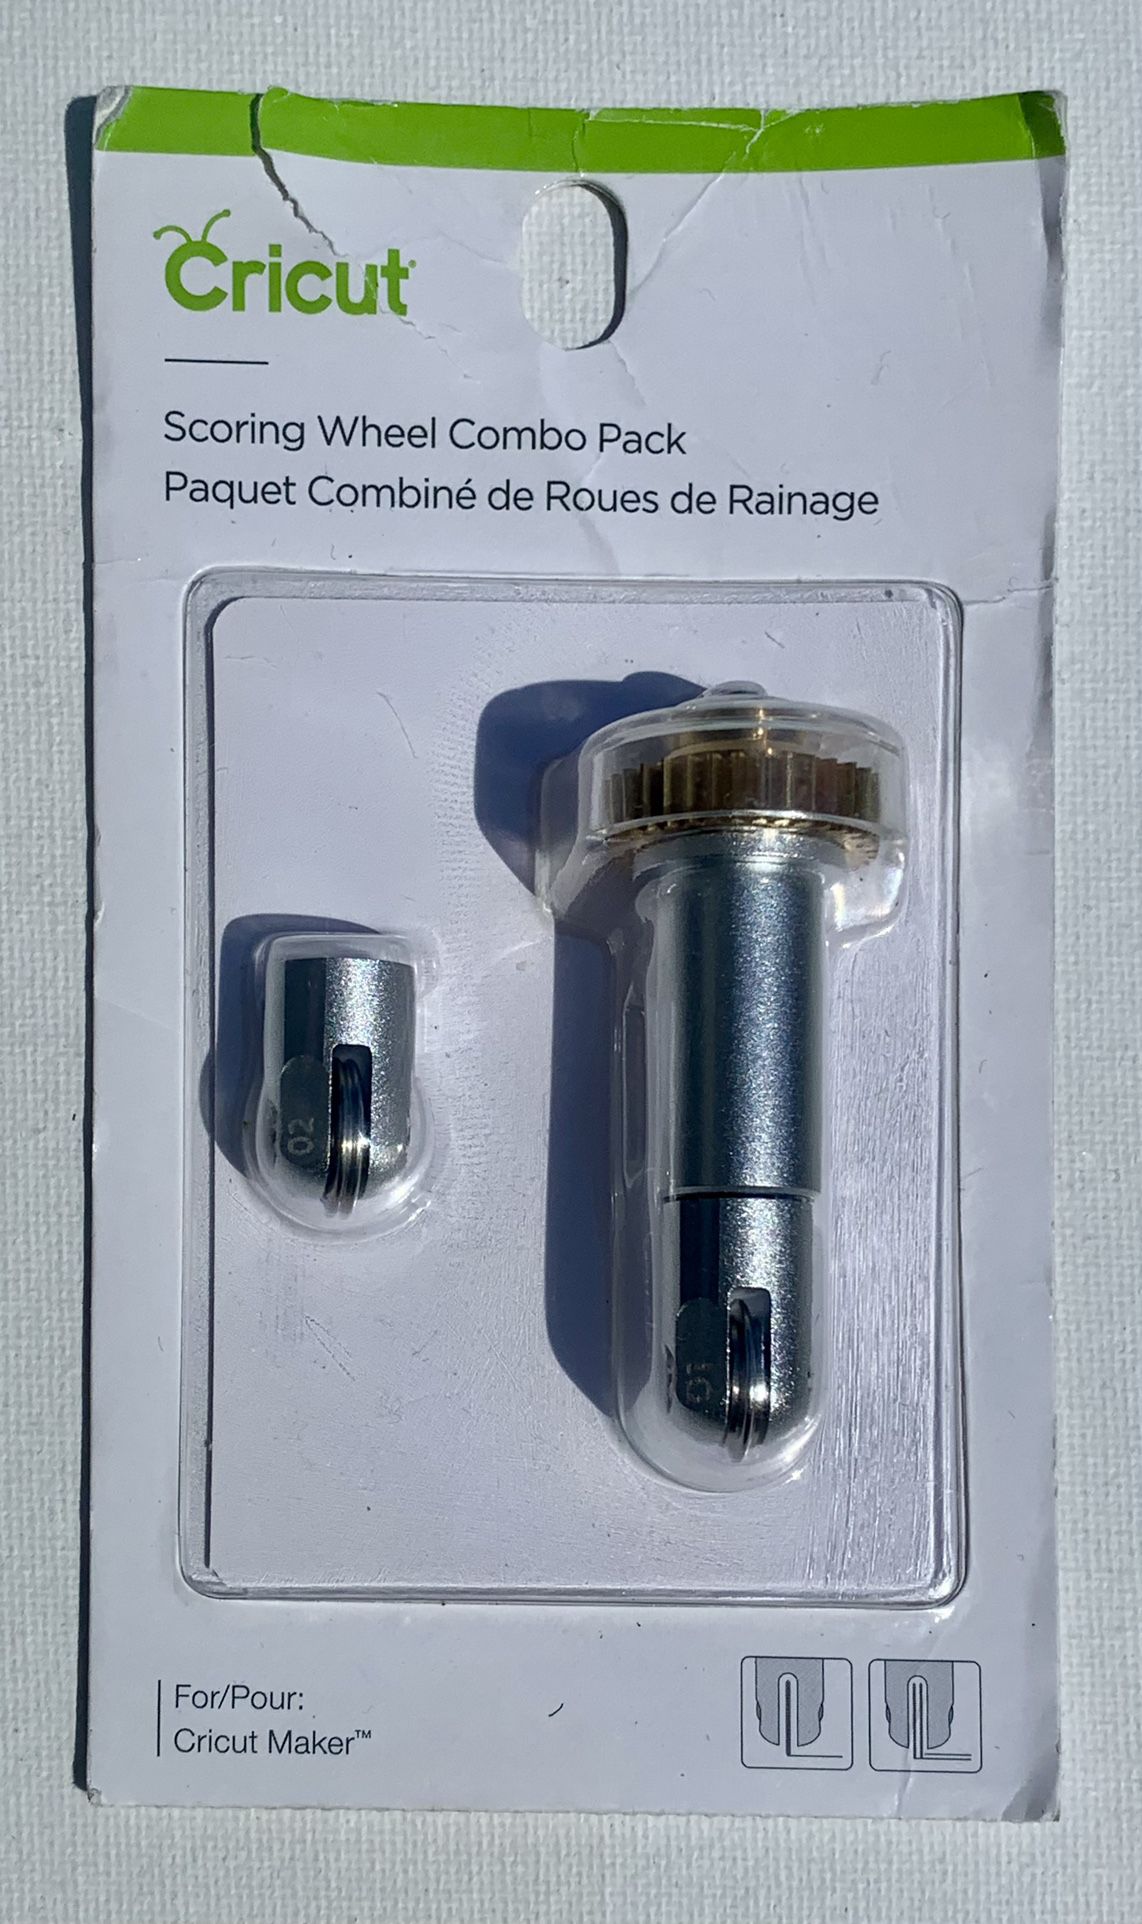 Cricut Scoring Wheel Combo Pack